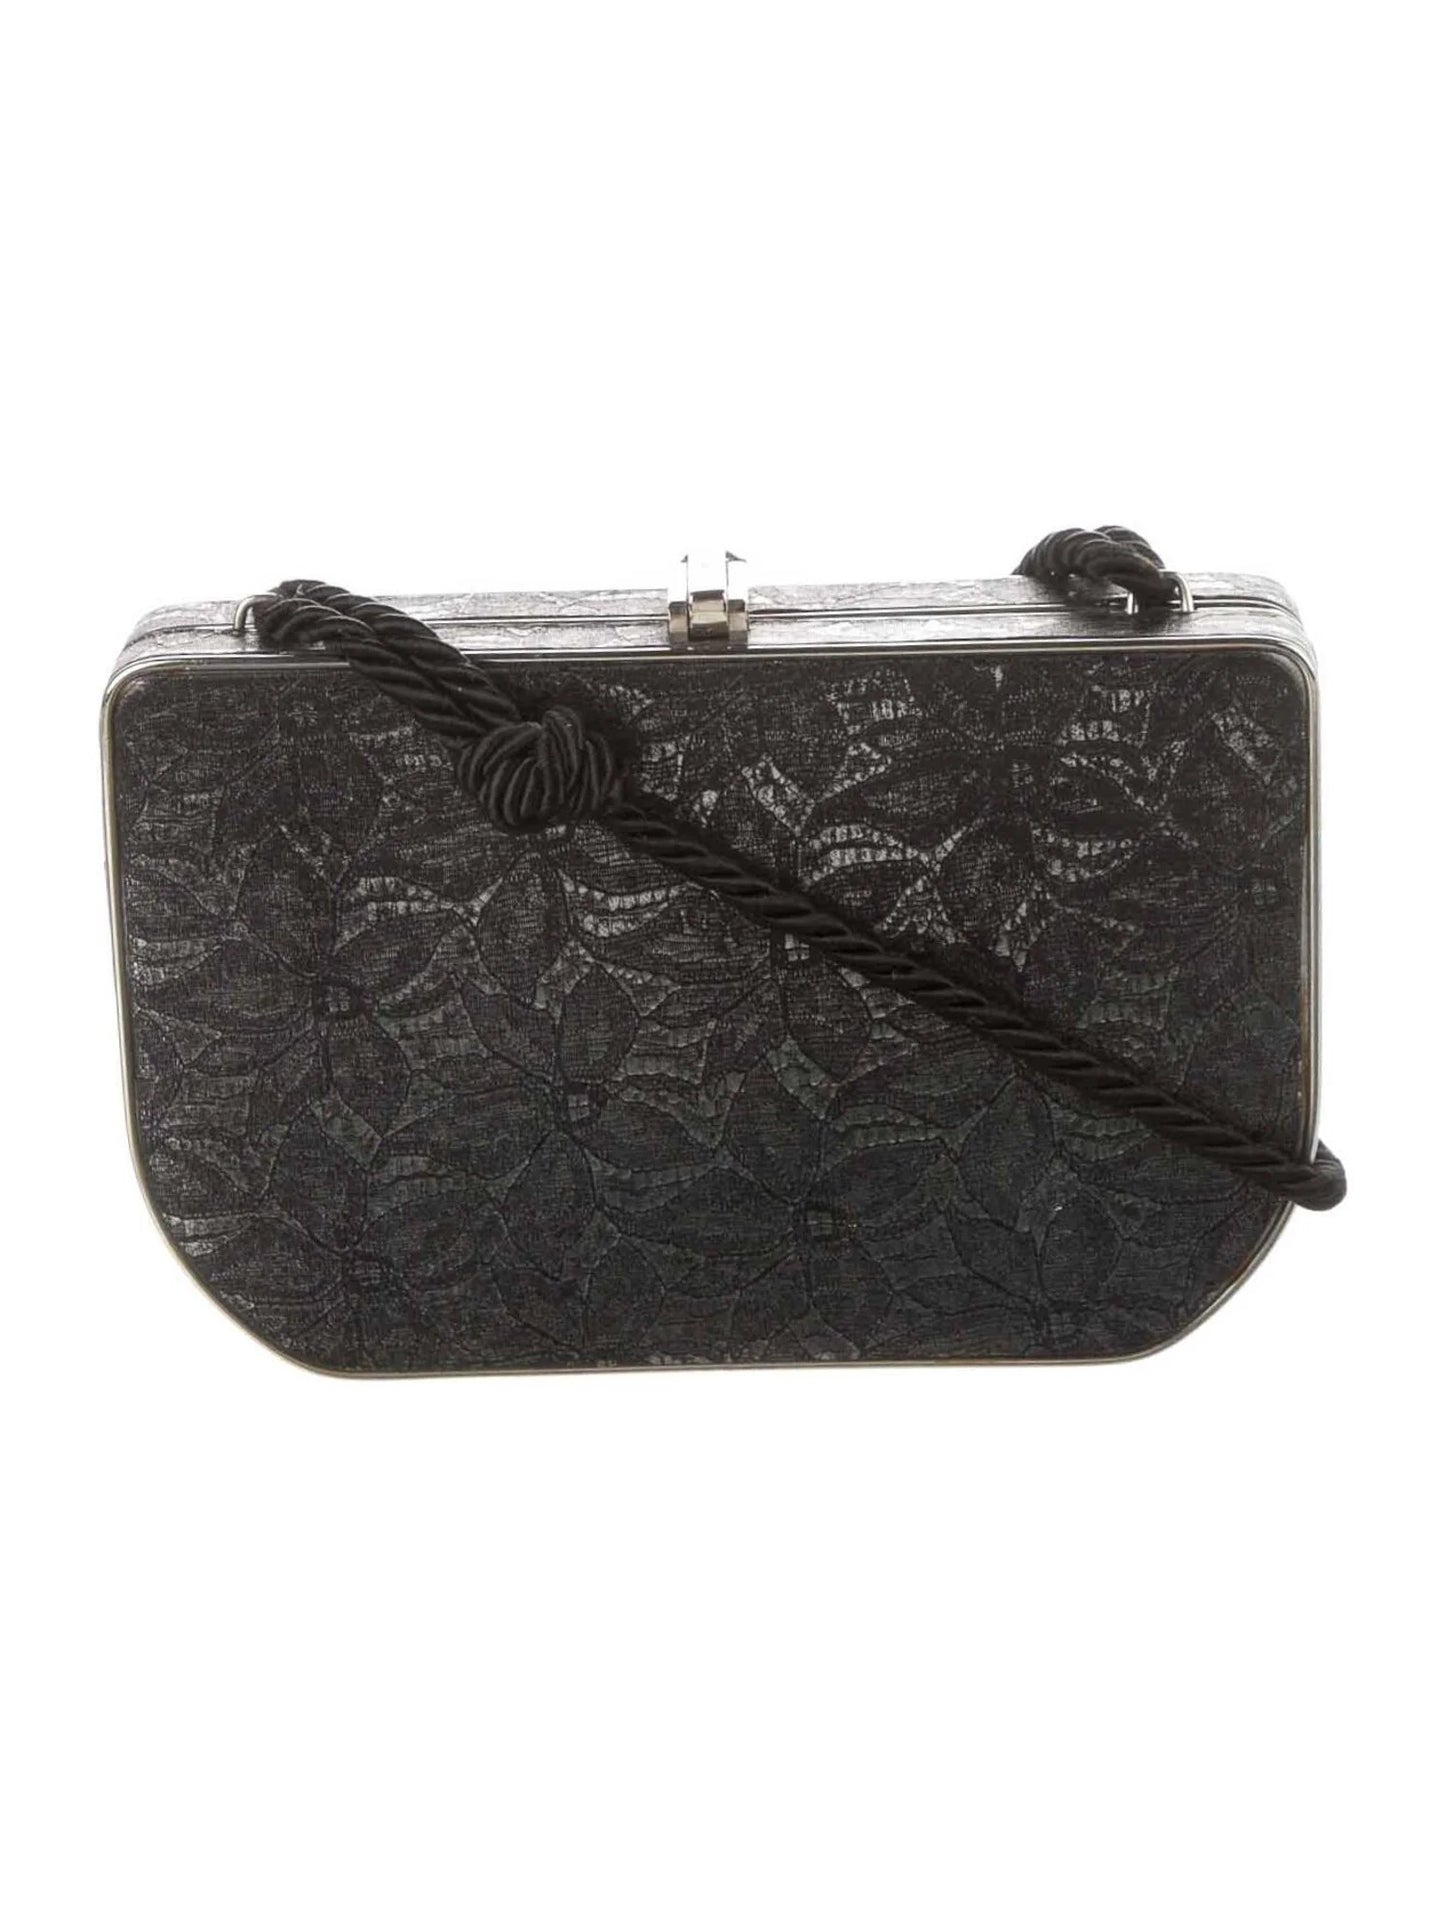 Fendi black floral lace print & chrome metal mini two-way evening bag